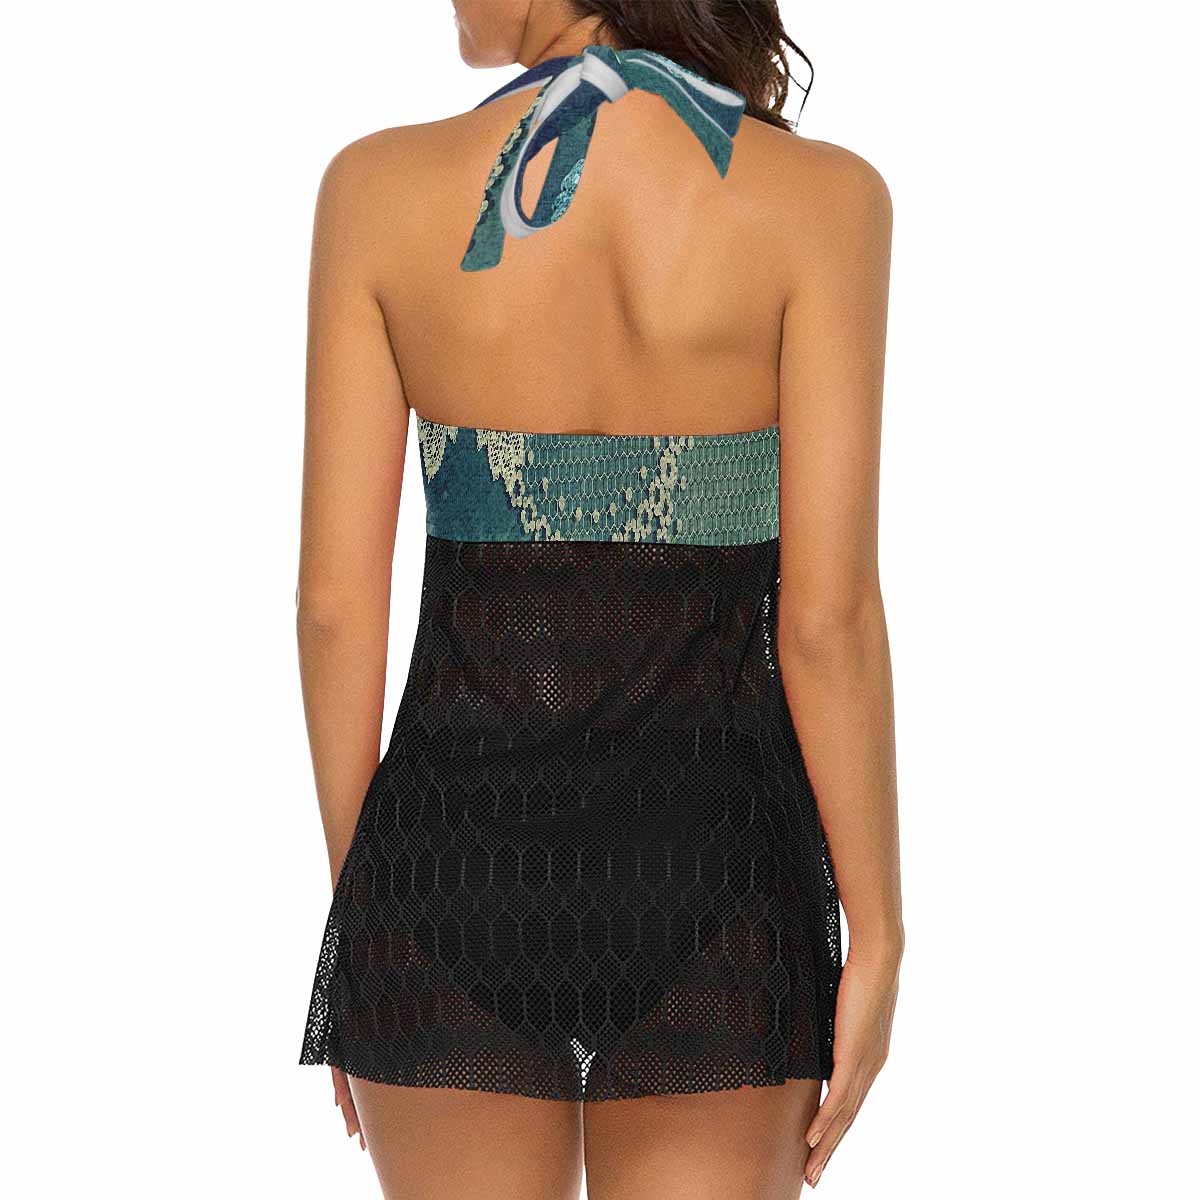 Bikini & cover up top swim wear, Printed Victorian lace design 04